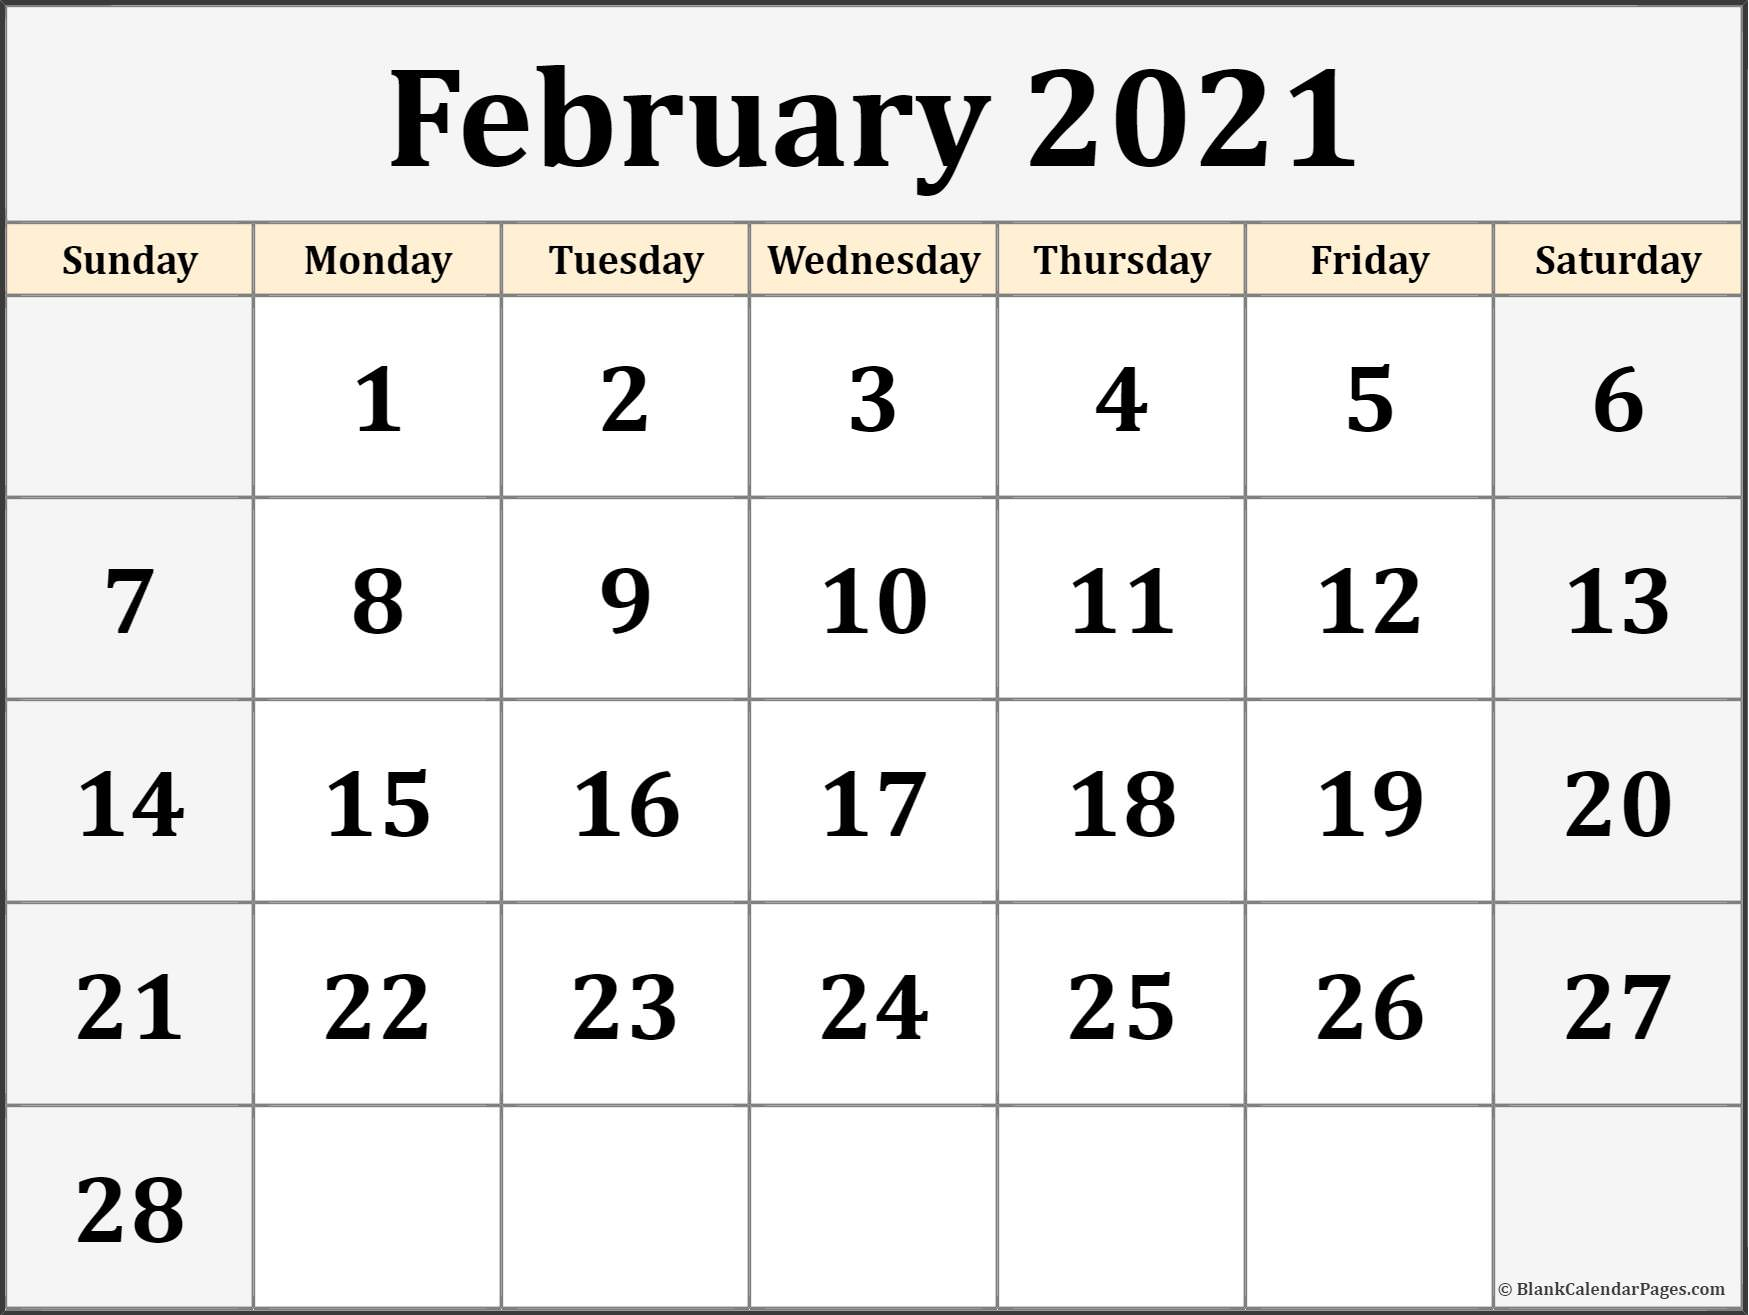 February 2021 Blank Calendar Collection.